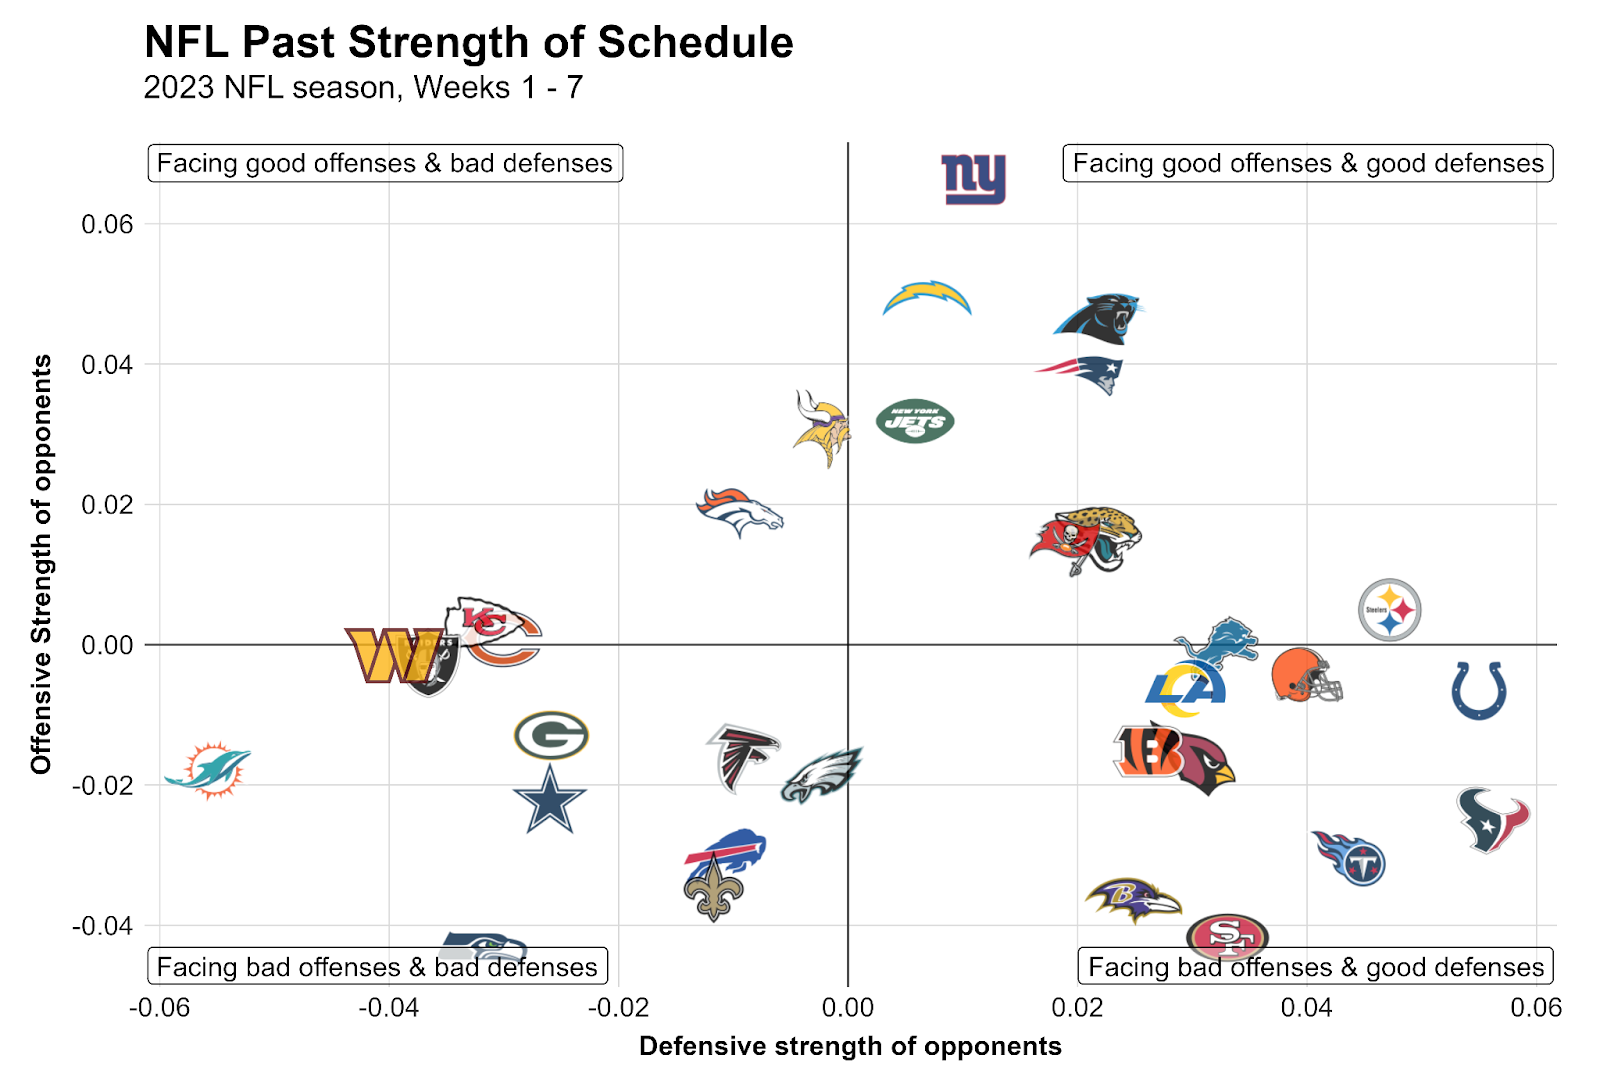 2023 NFL Strength Of Schedule, Teams Ranked for Regular Season